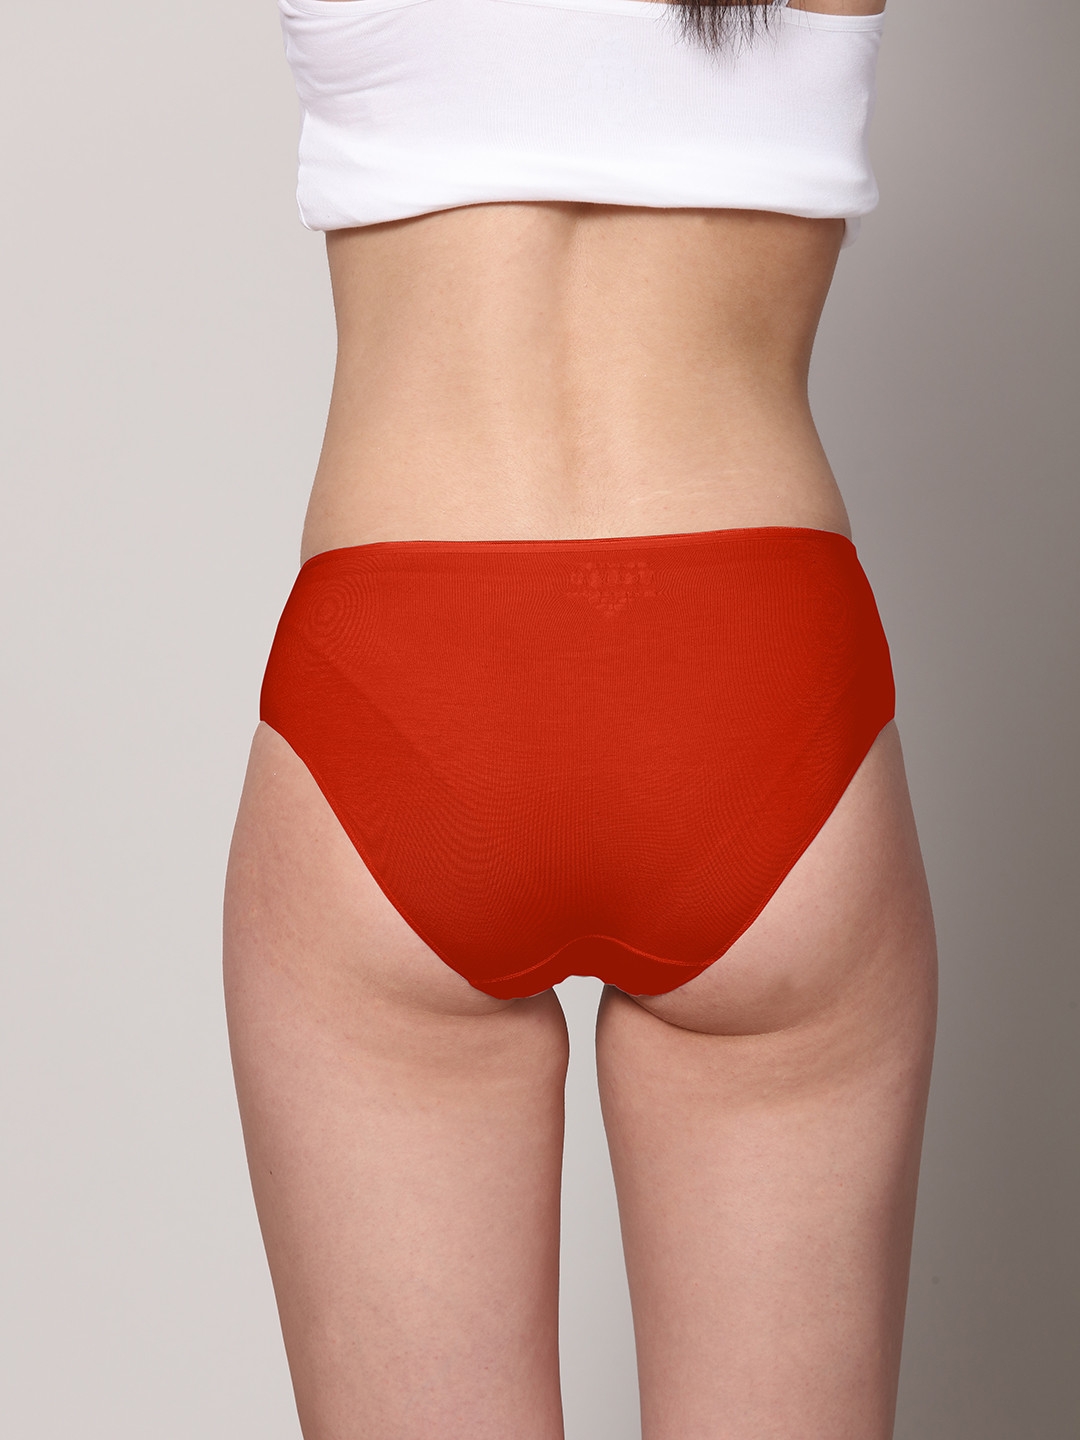 AshleyandAlvis | AshleyandAlvis Women's Panties Micro Modal, Anti Bacterial, Skinny Soft, Premium Hipster  -No Itching, Sweat Proof, Double In-seam Gusset 5